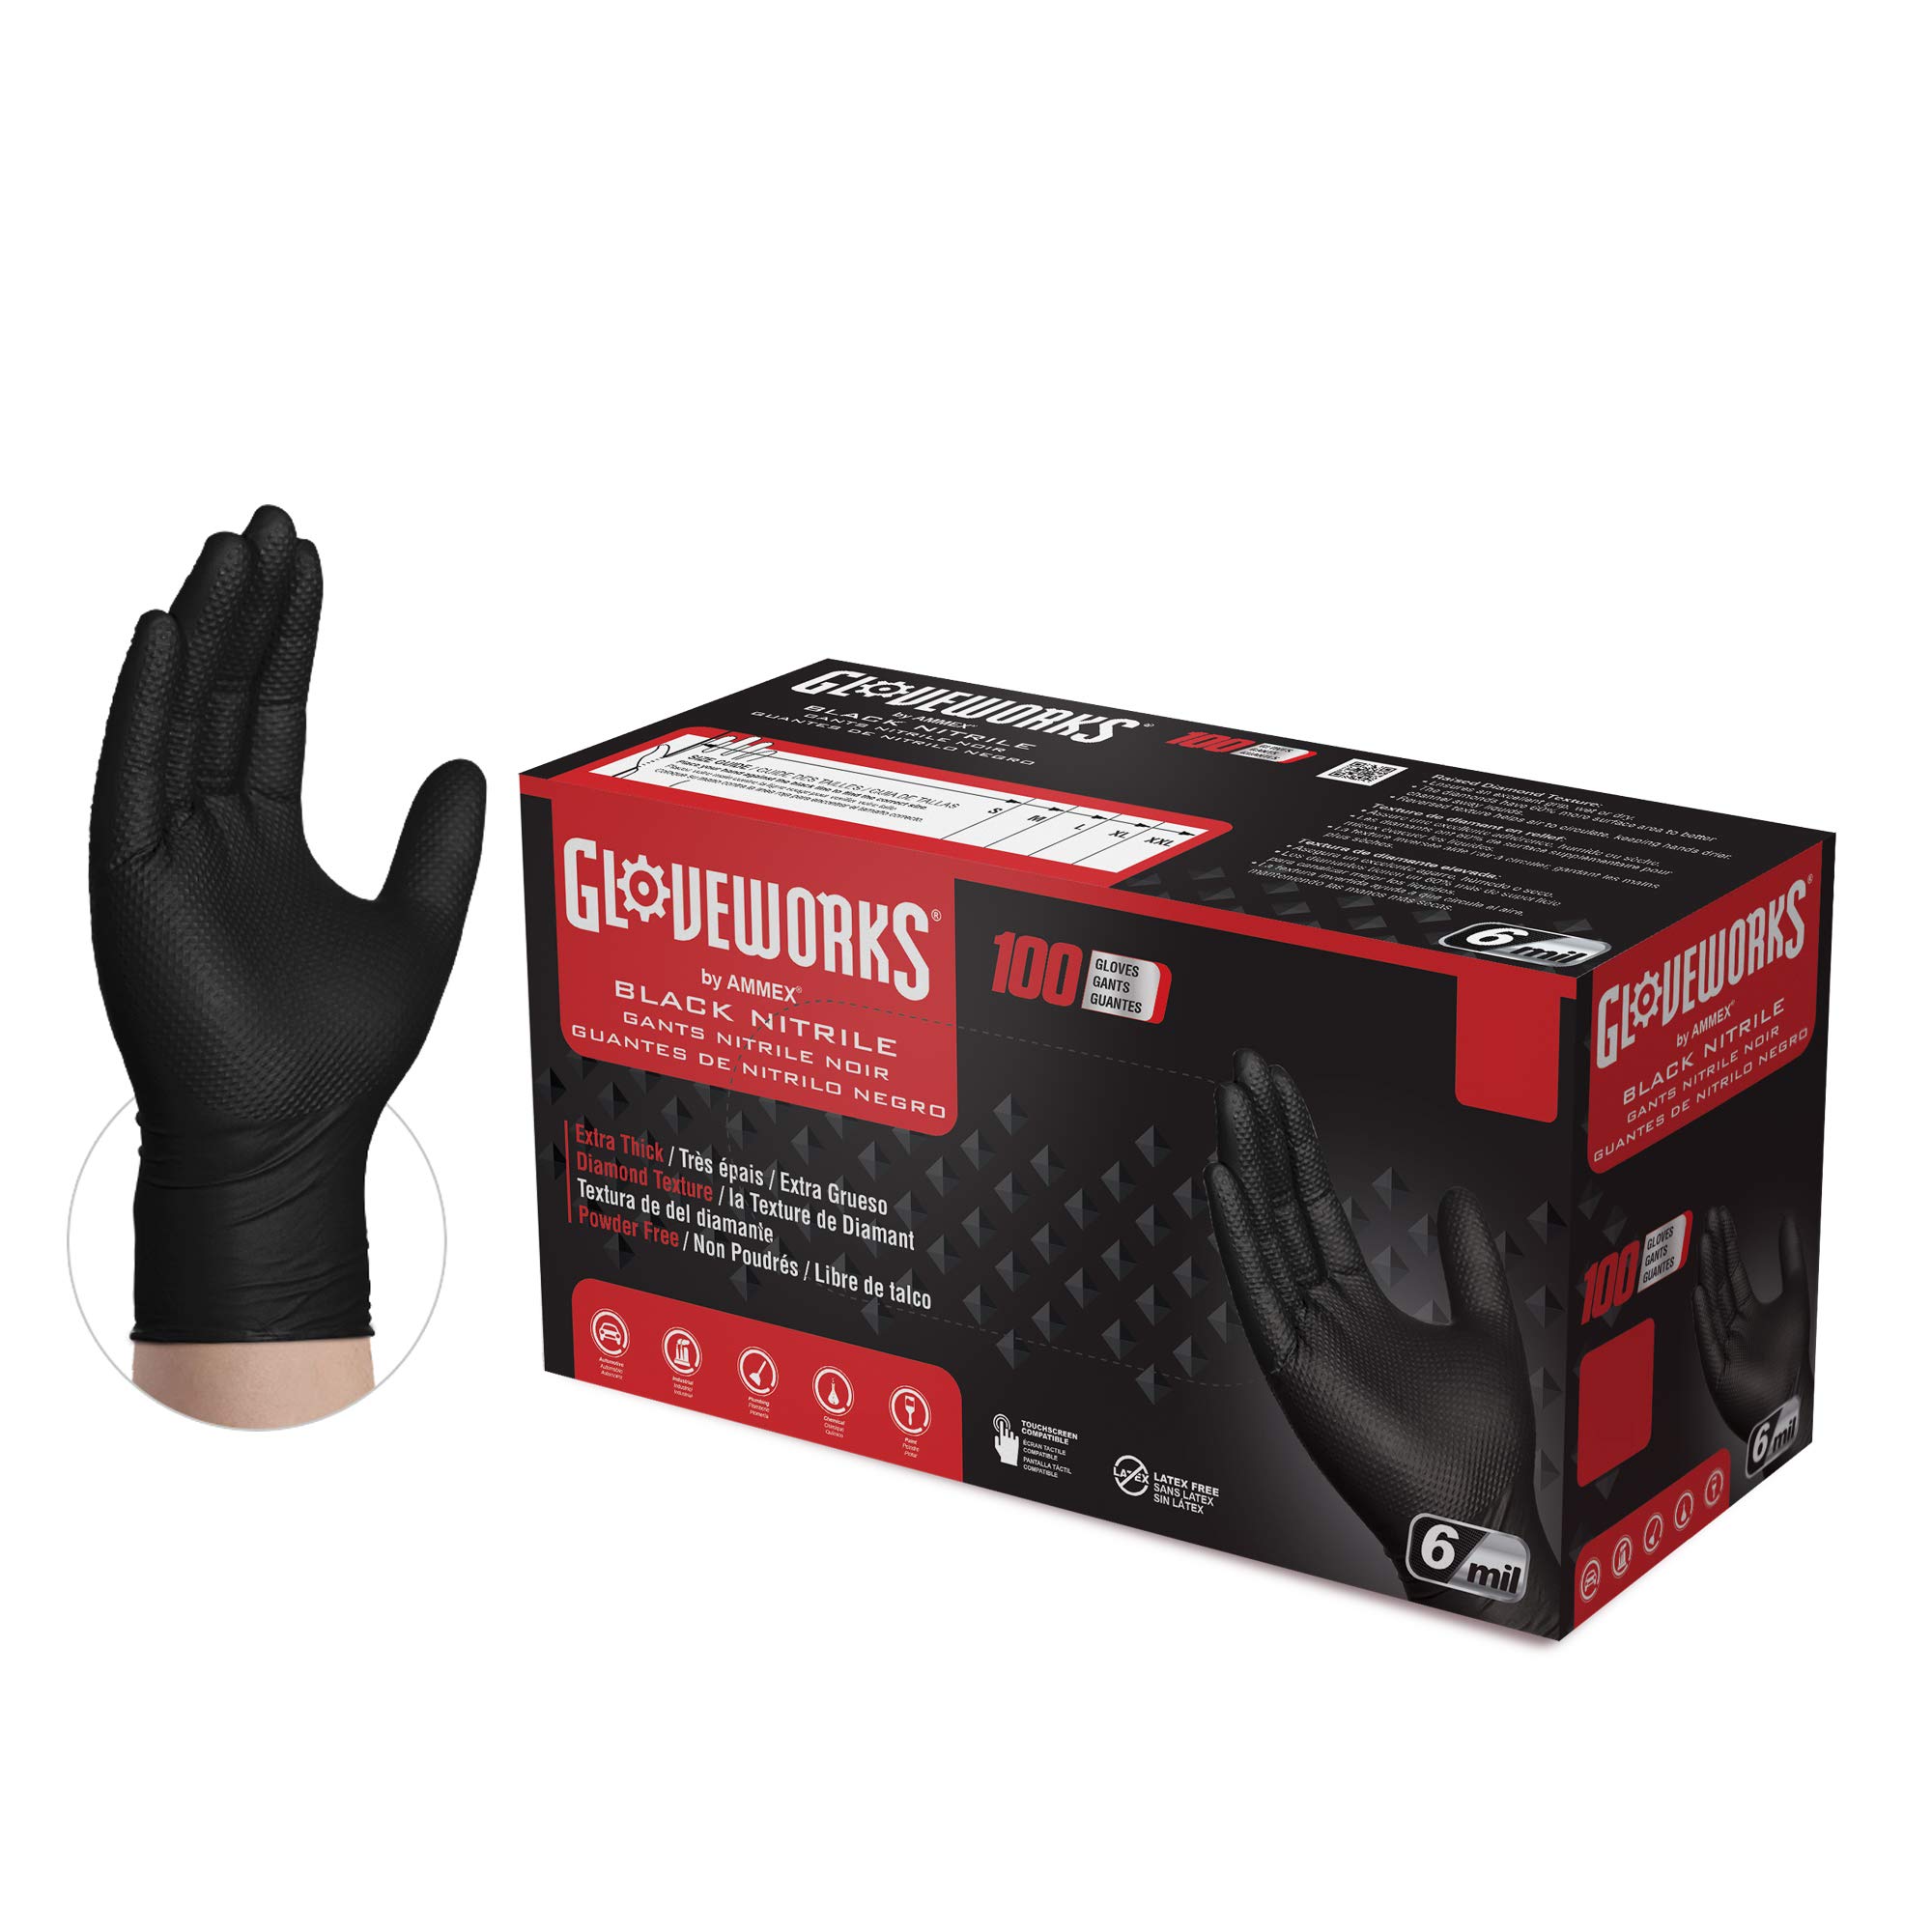 GLOVEWORKS HD Black Nitrile Industrial Disposable Gloves, 6 Mil, Latex & Powder-Free, Food-Safe, Raised Diamond Texture